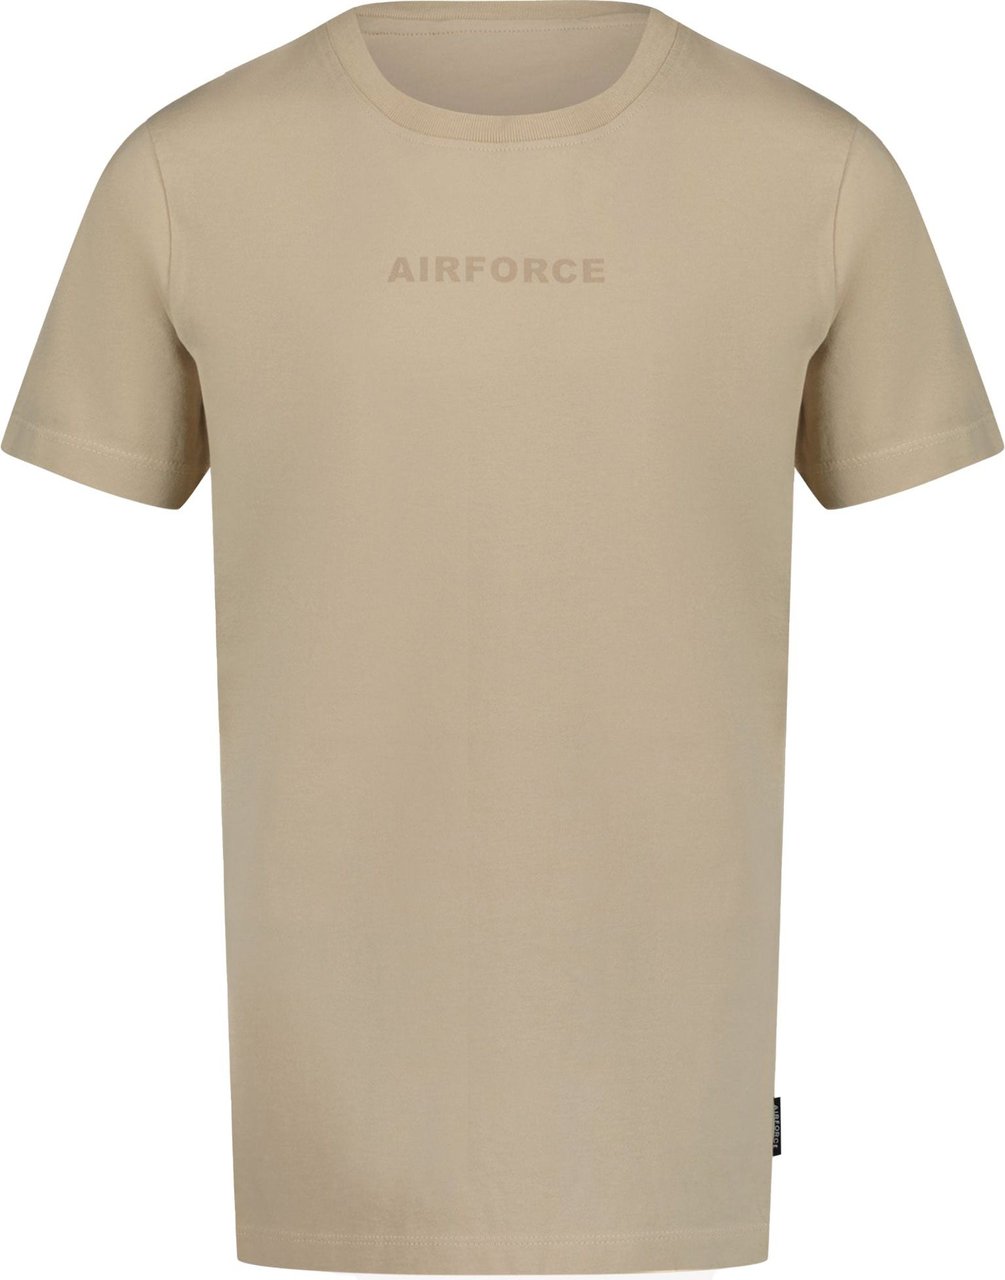 Airforce Airforce Kinder Jongens T-Shirt Zand Taupe